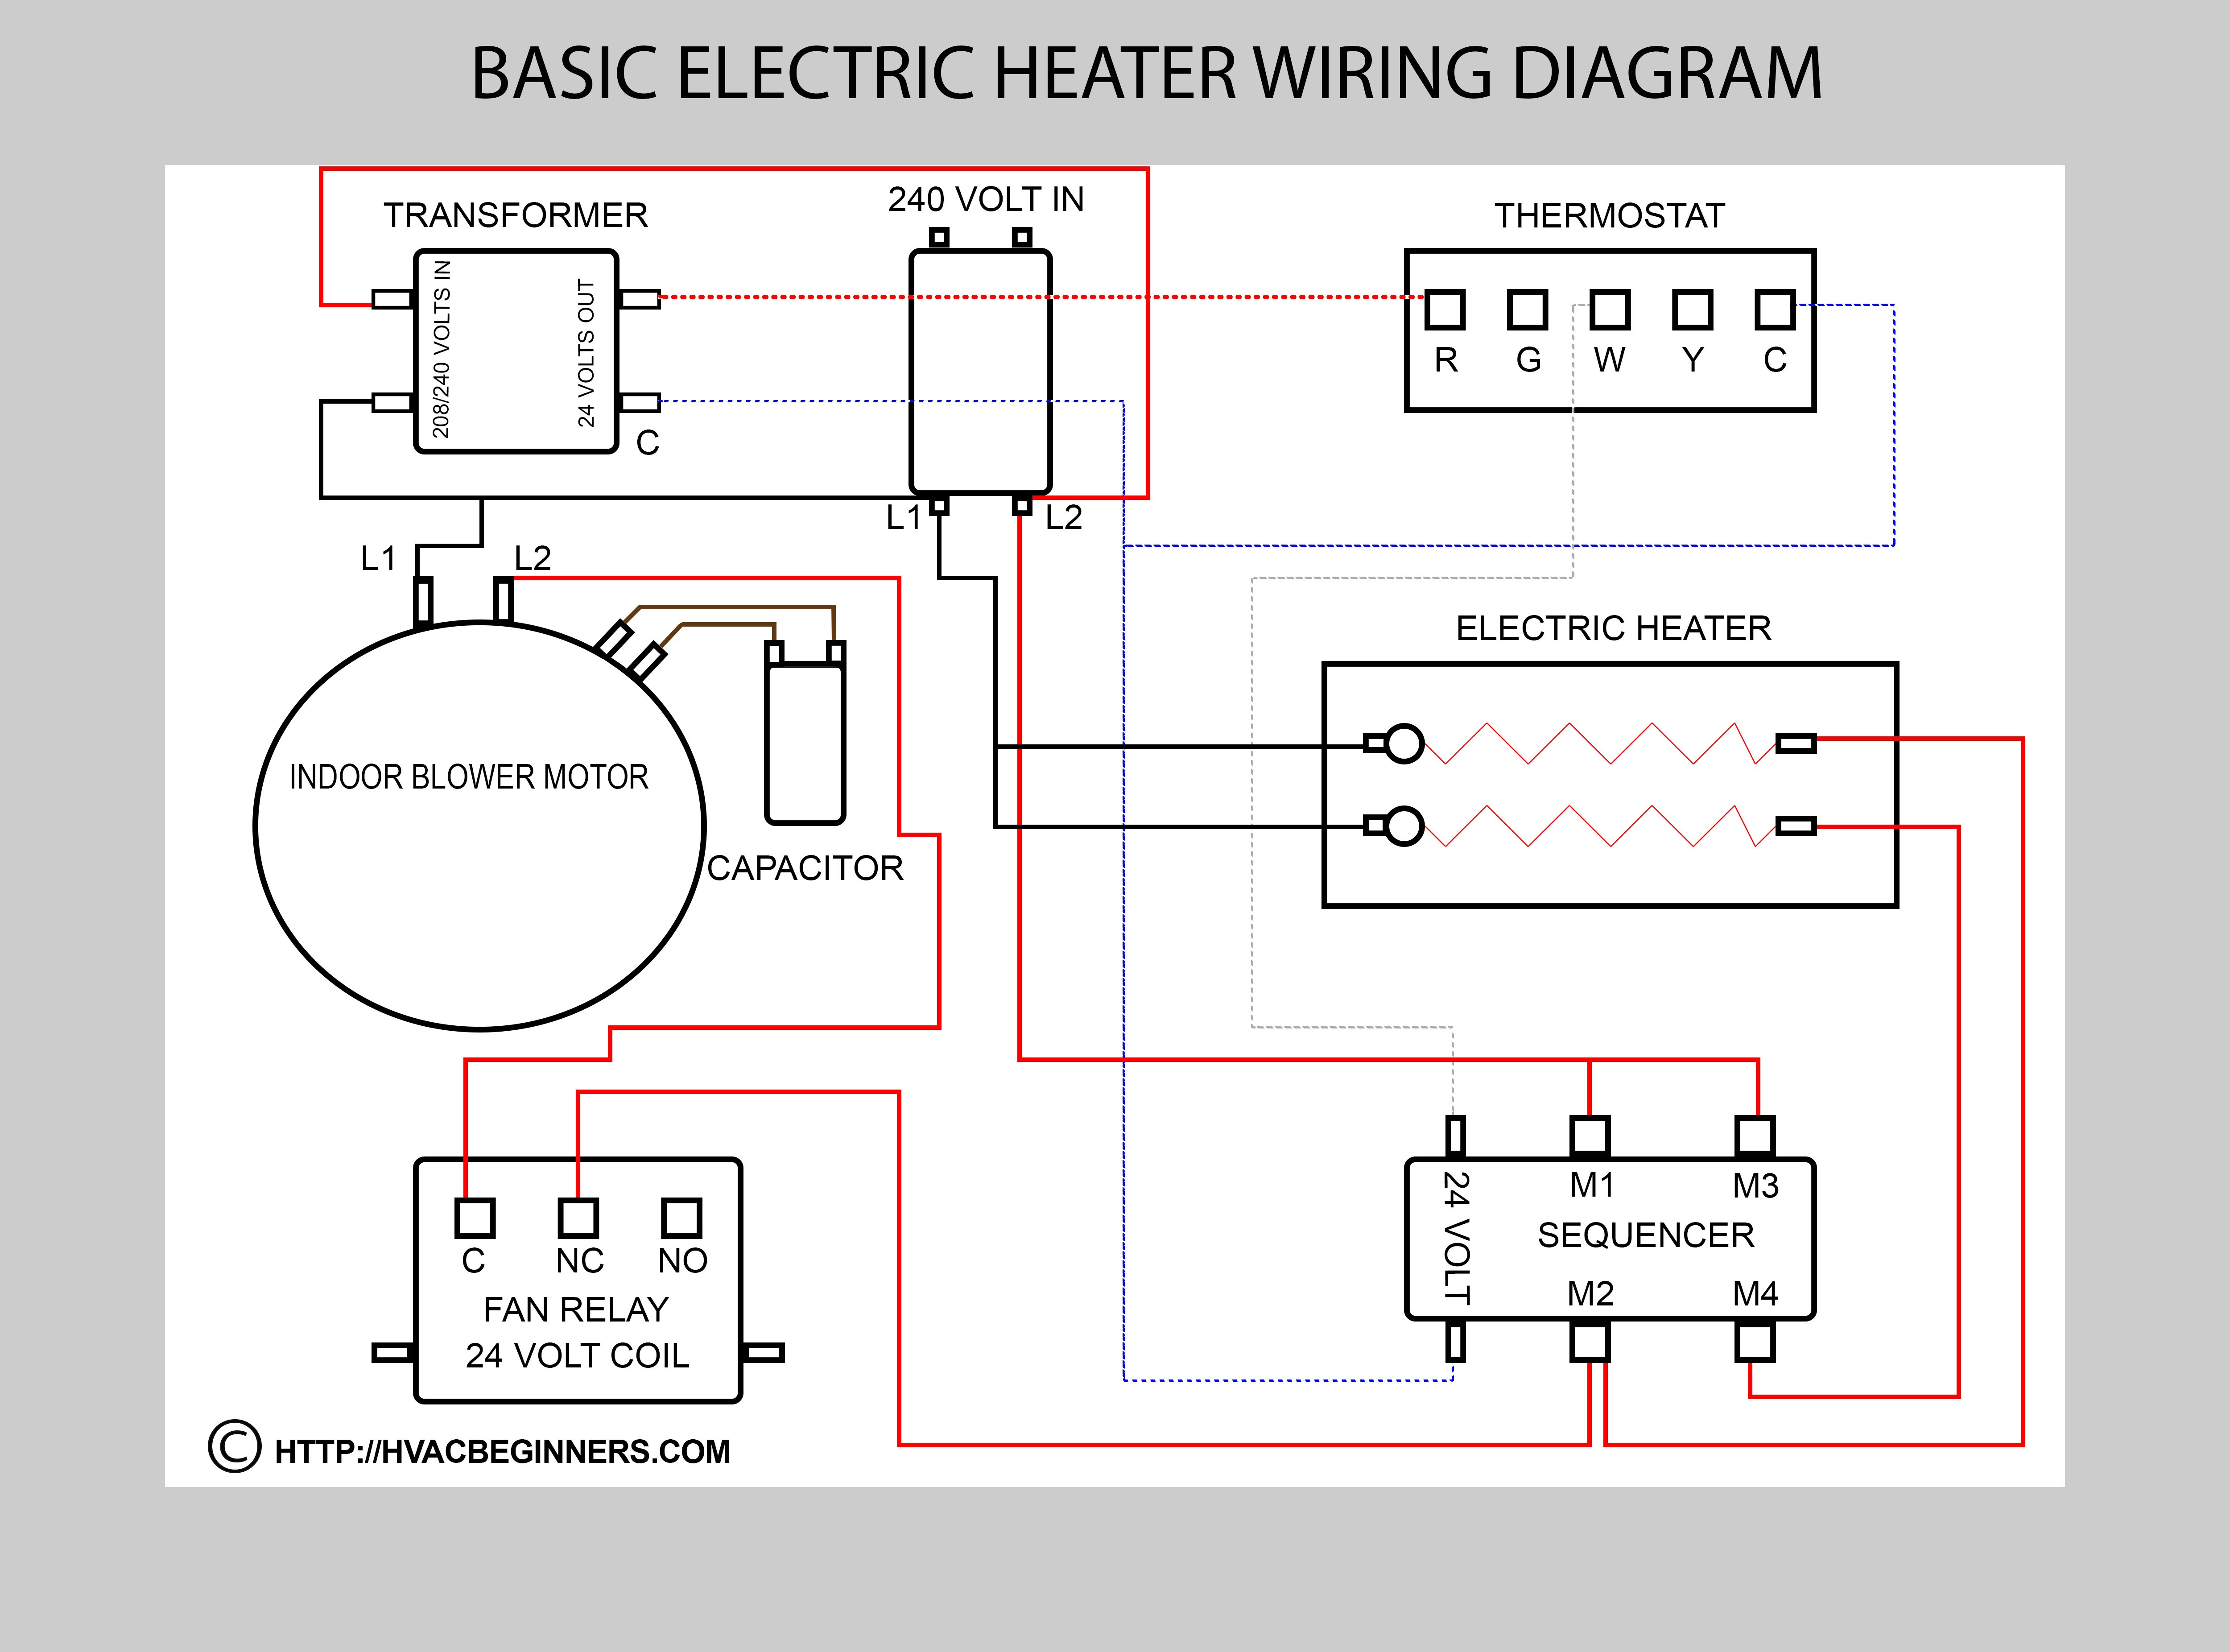 Circuit Diagram Symbols Tank Installation Diagram Further Electrical House Wiring Circuit